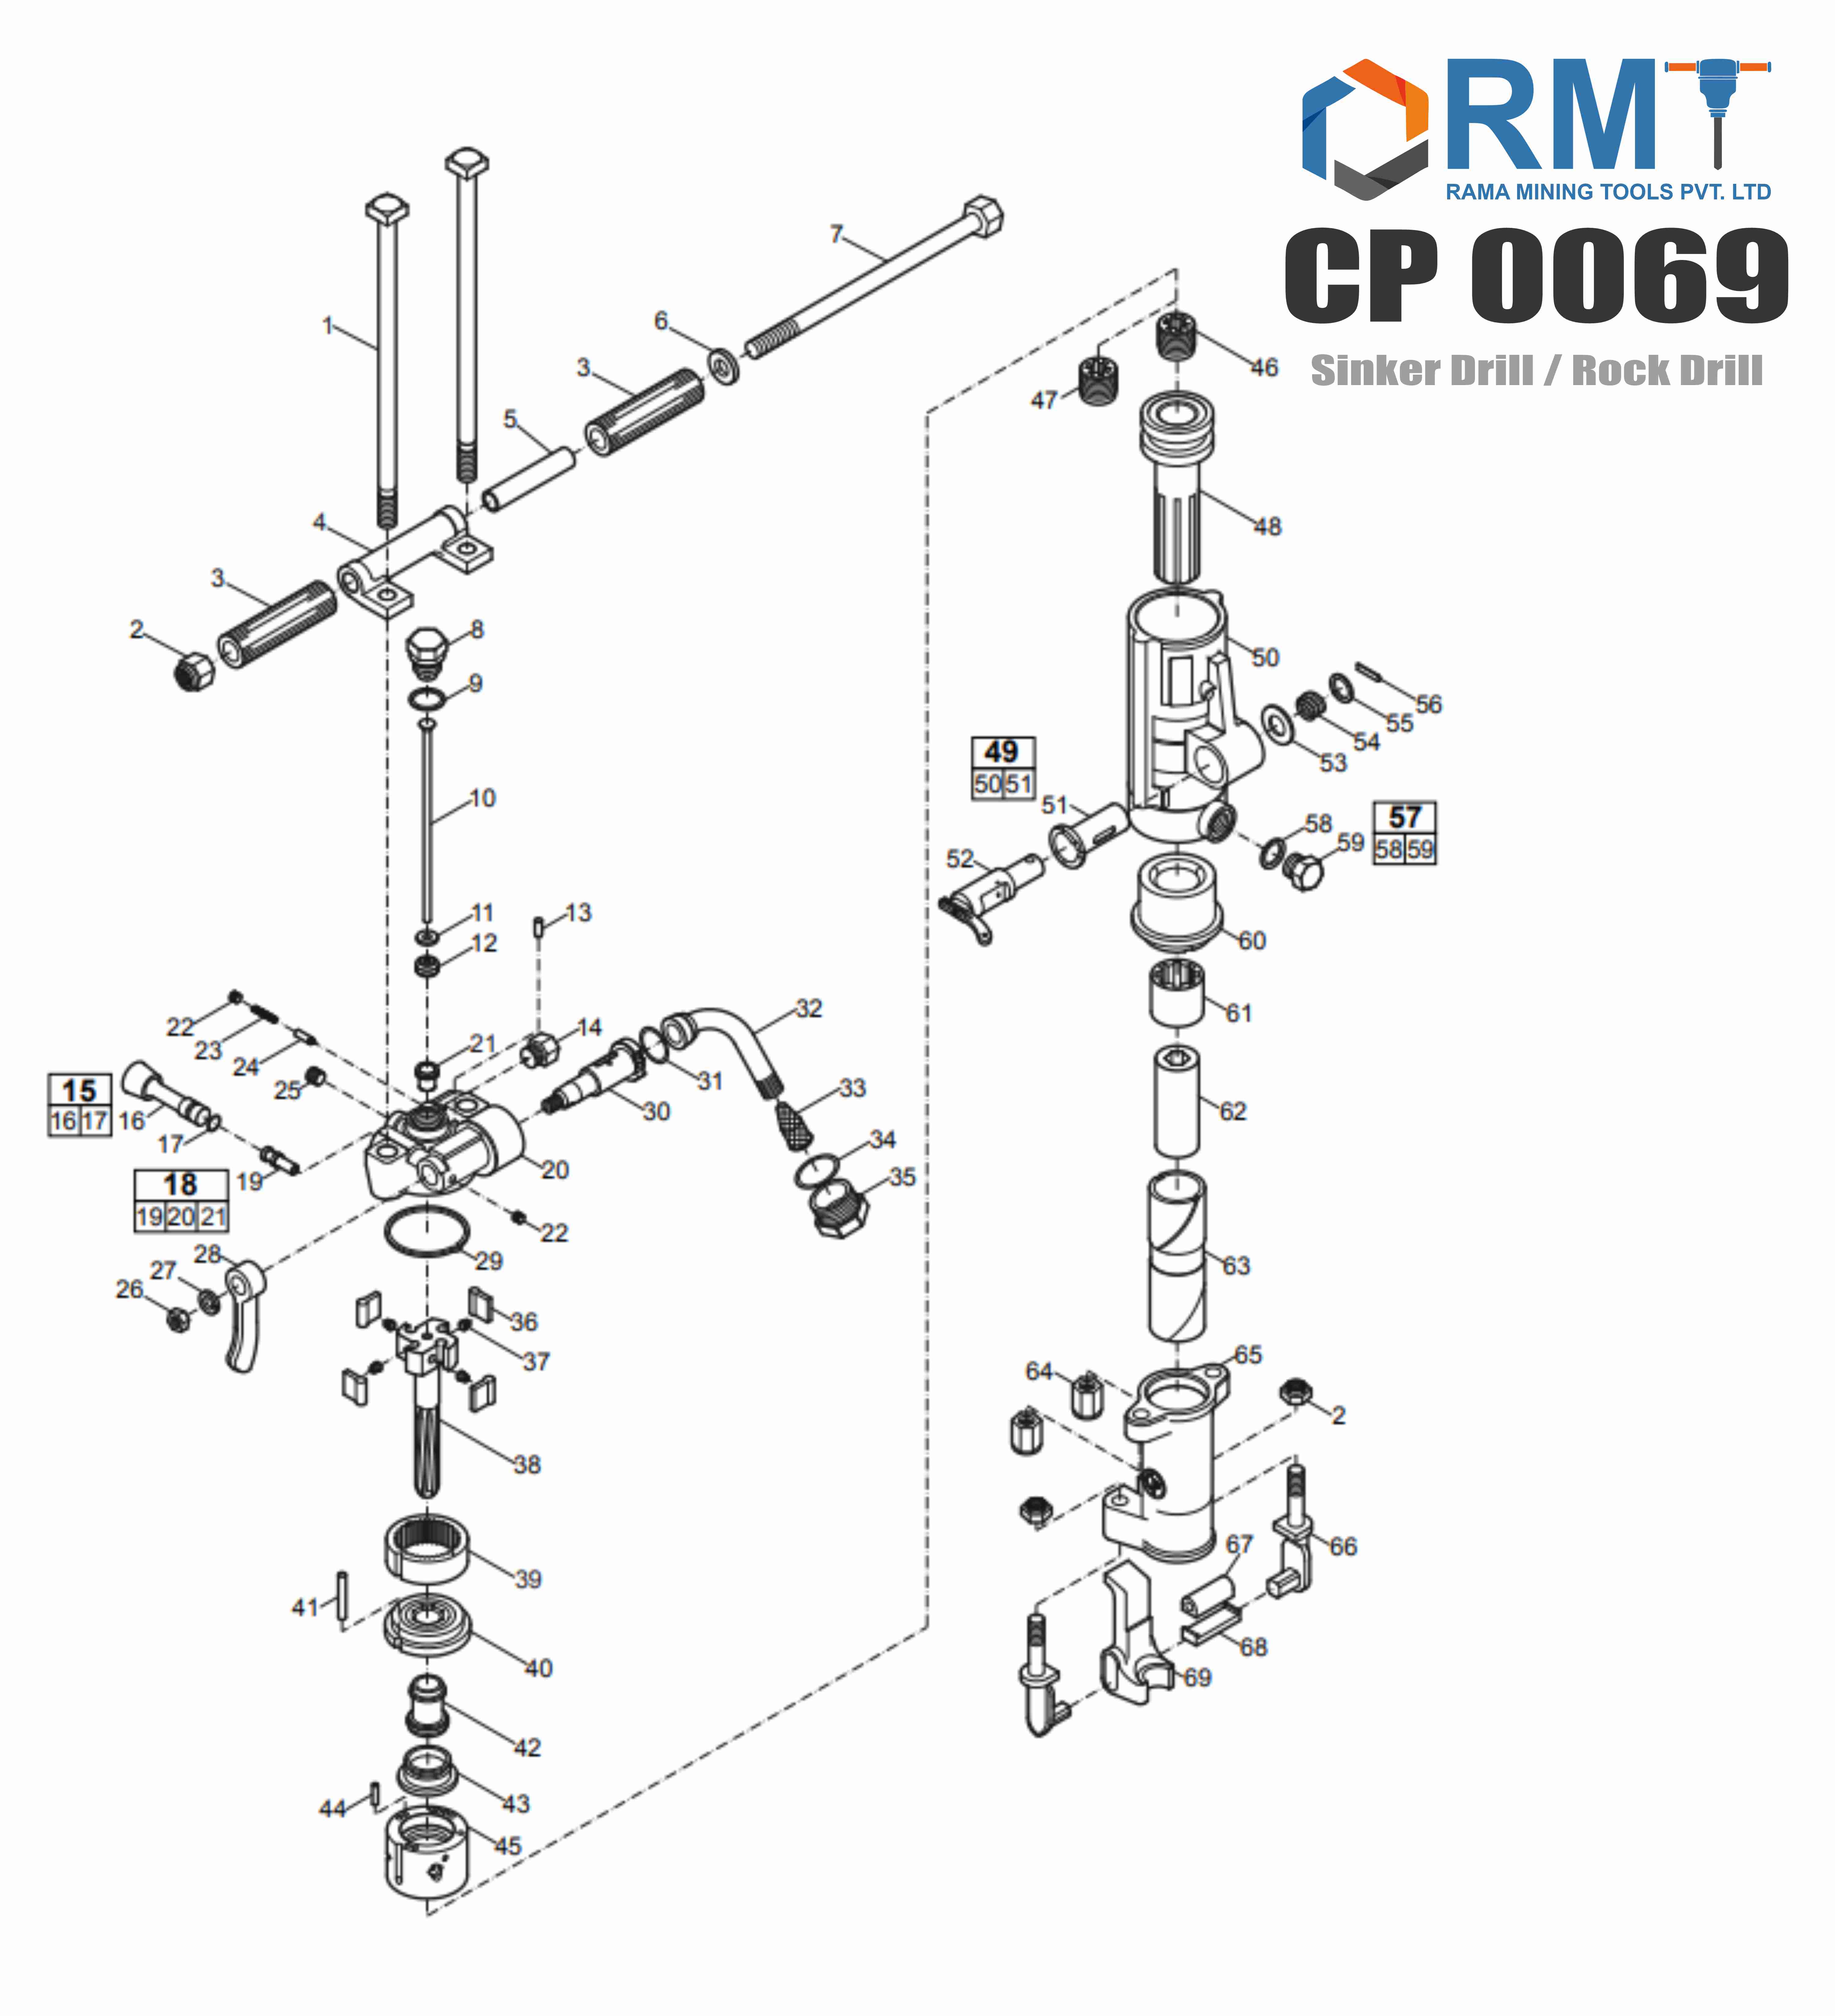 CP 0069 - Pneumatic Rock Drill